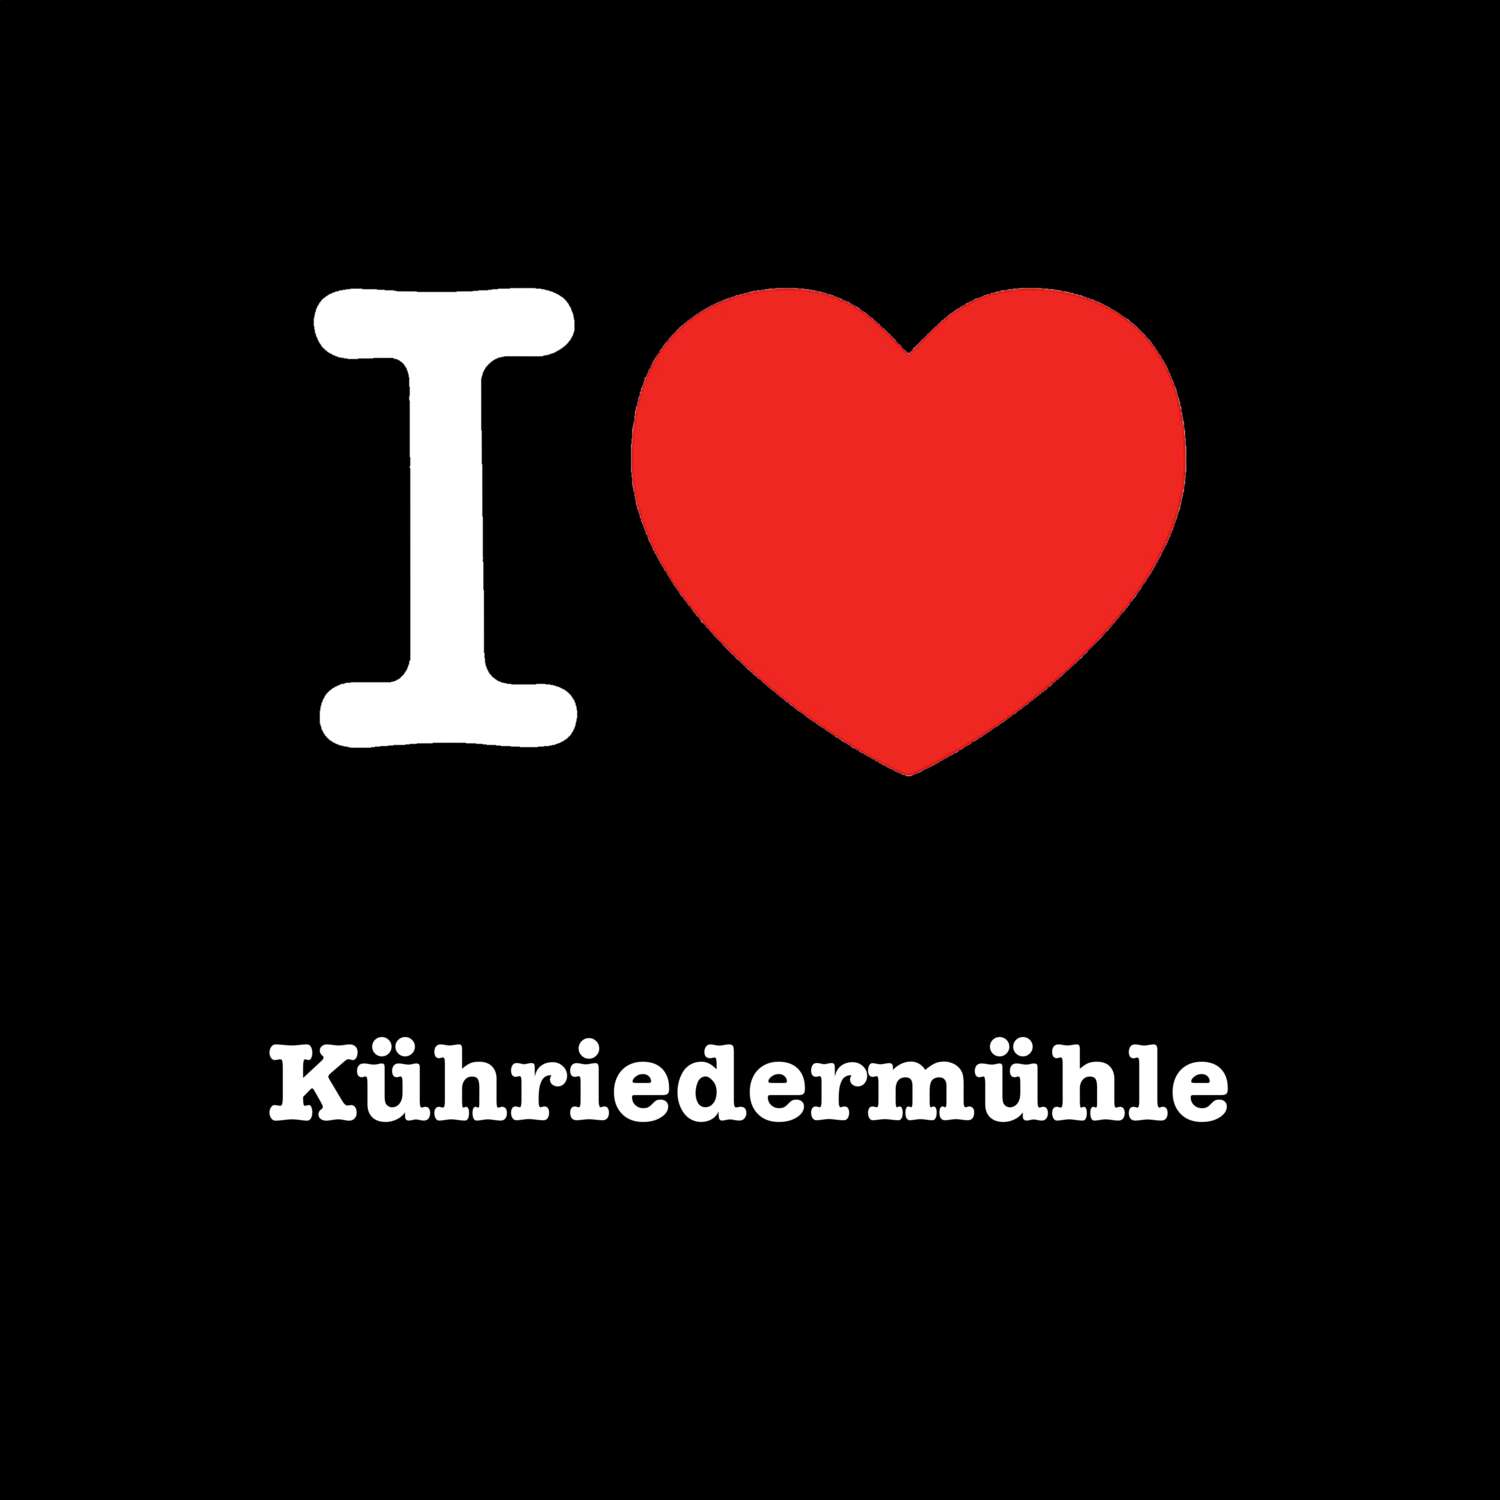 Kühriedermühle T-Shirt »I love«